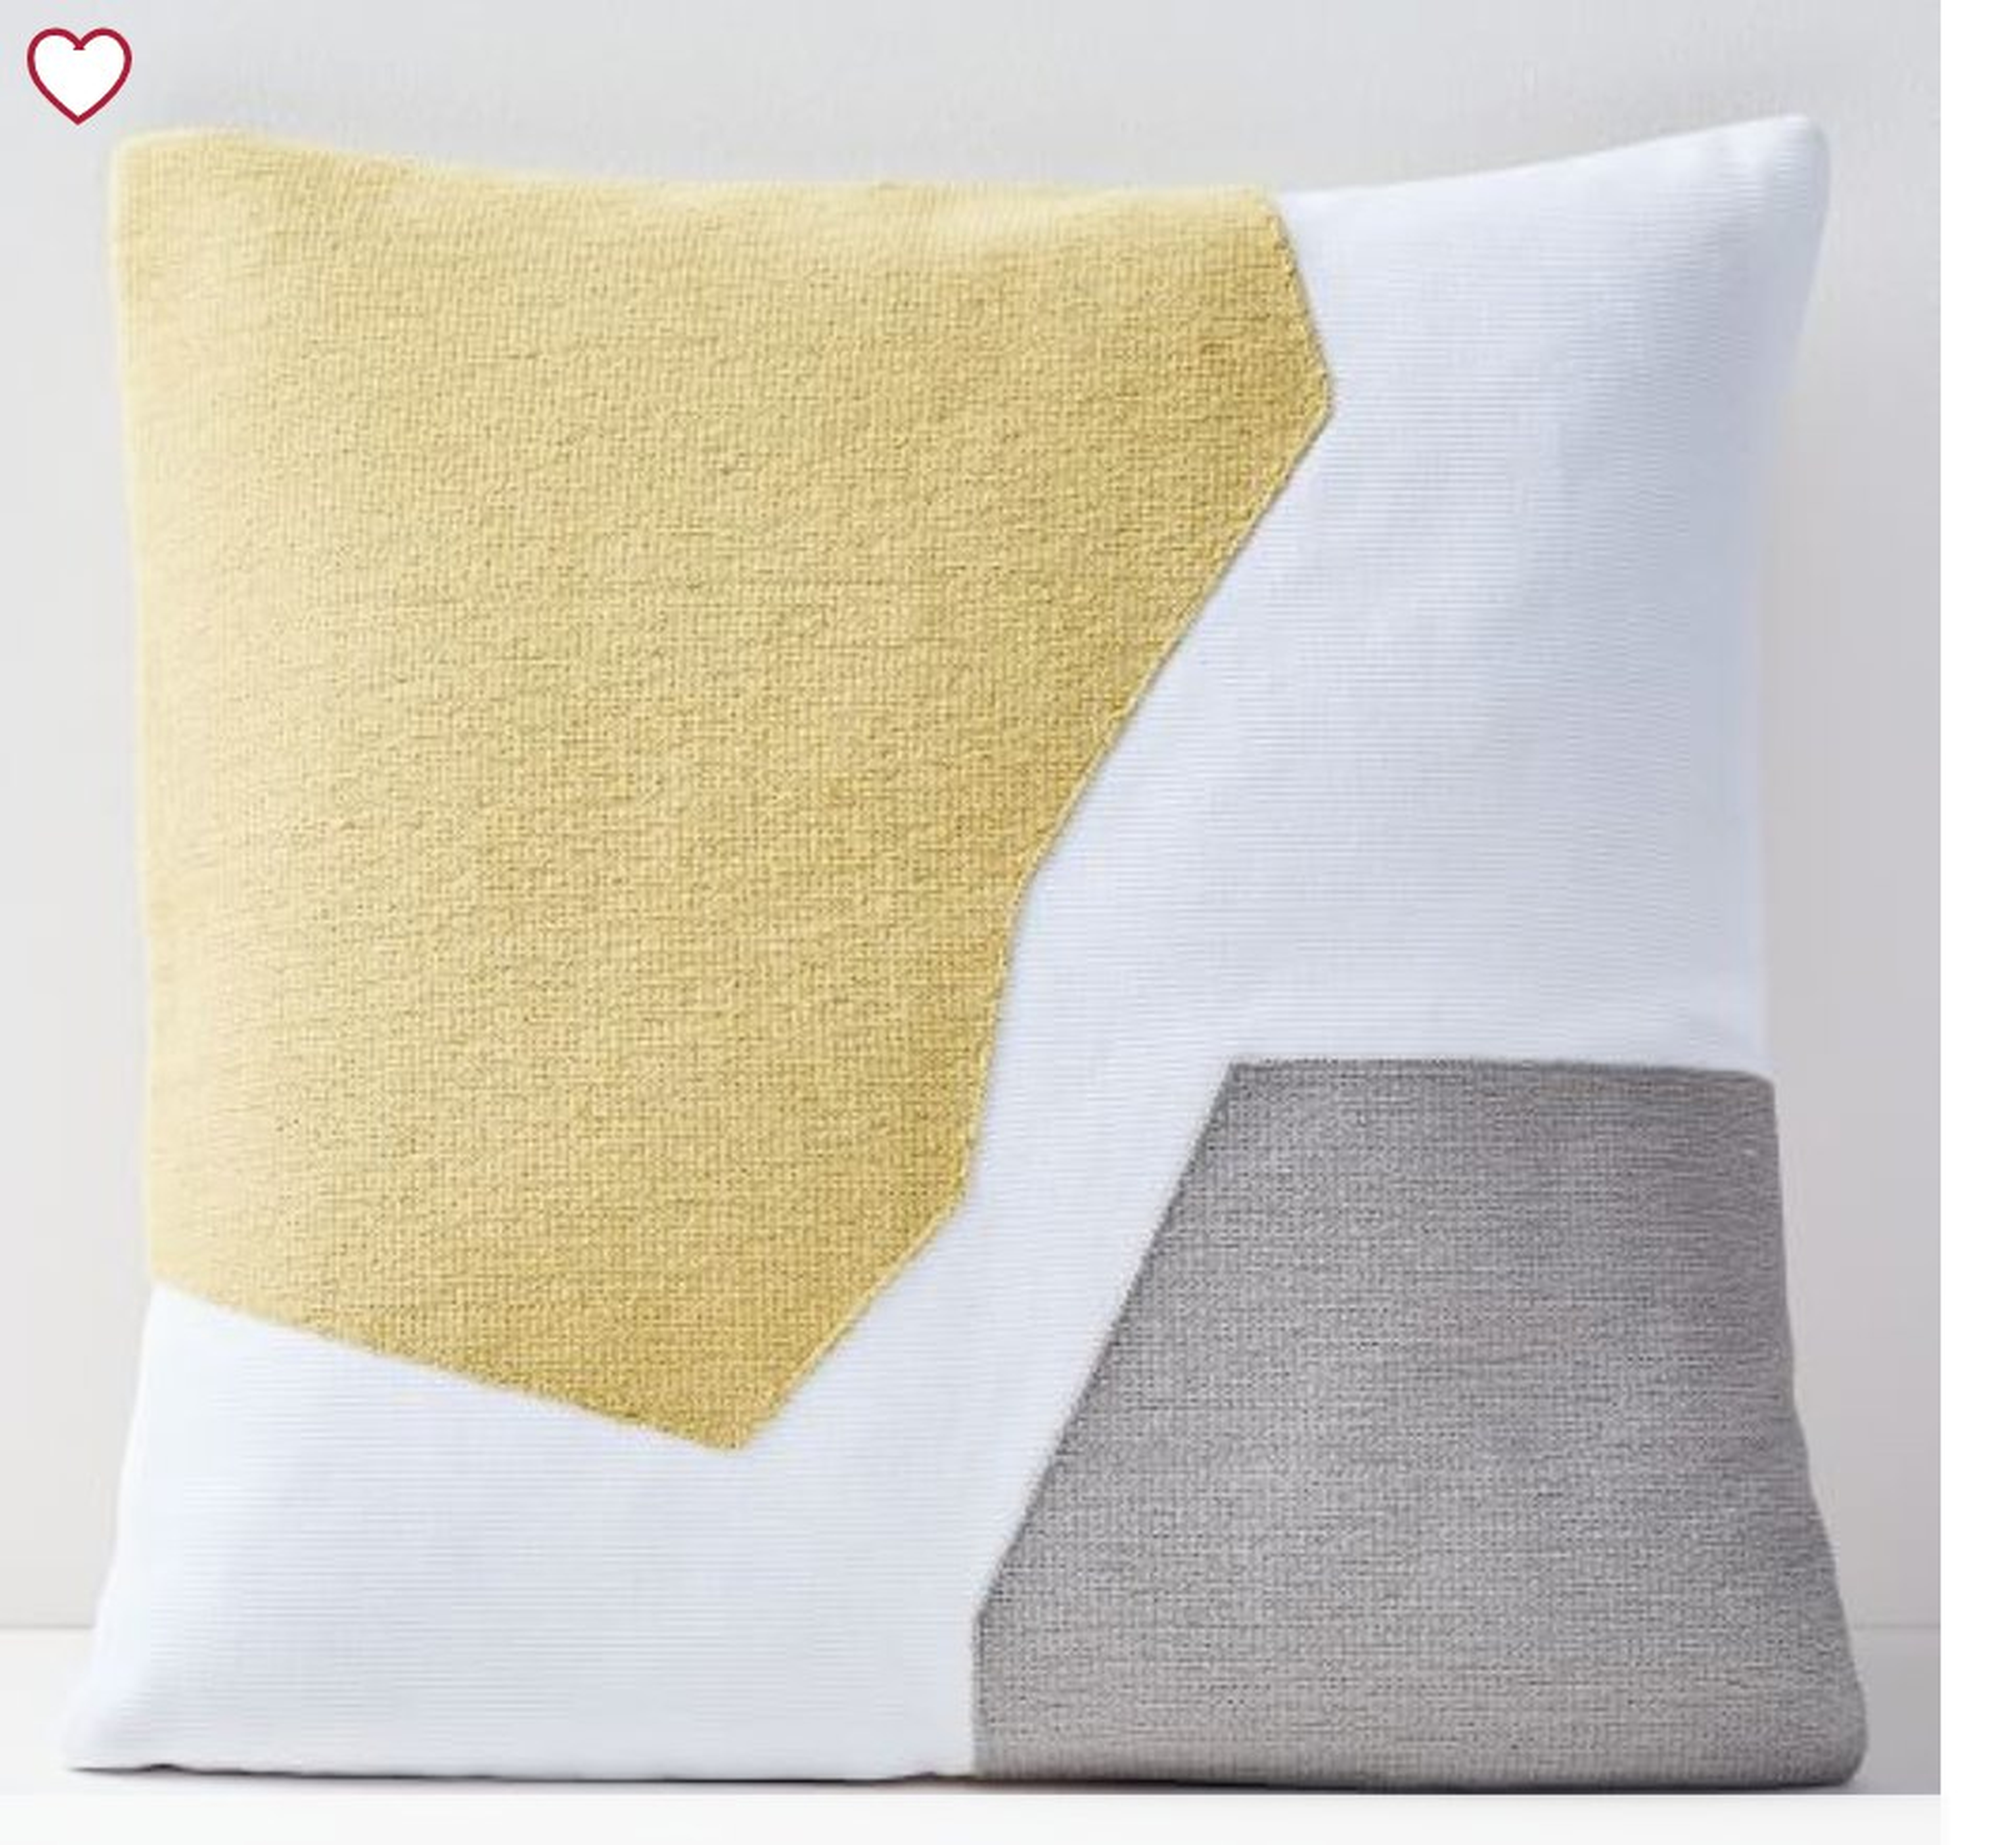 Corded Minimalist Geo Pillow Cover, Yellow Stone, 20"x20" - West Elm